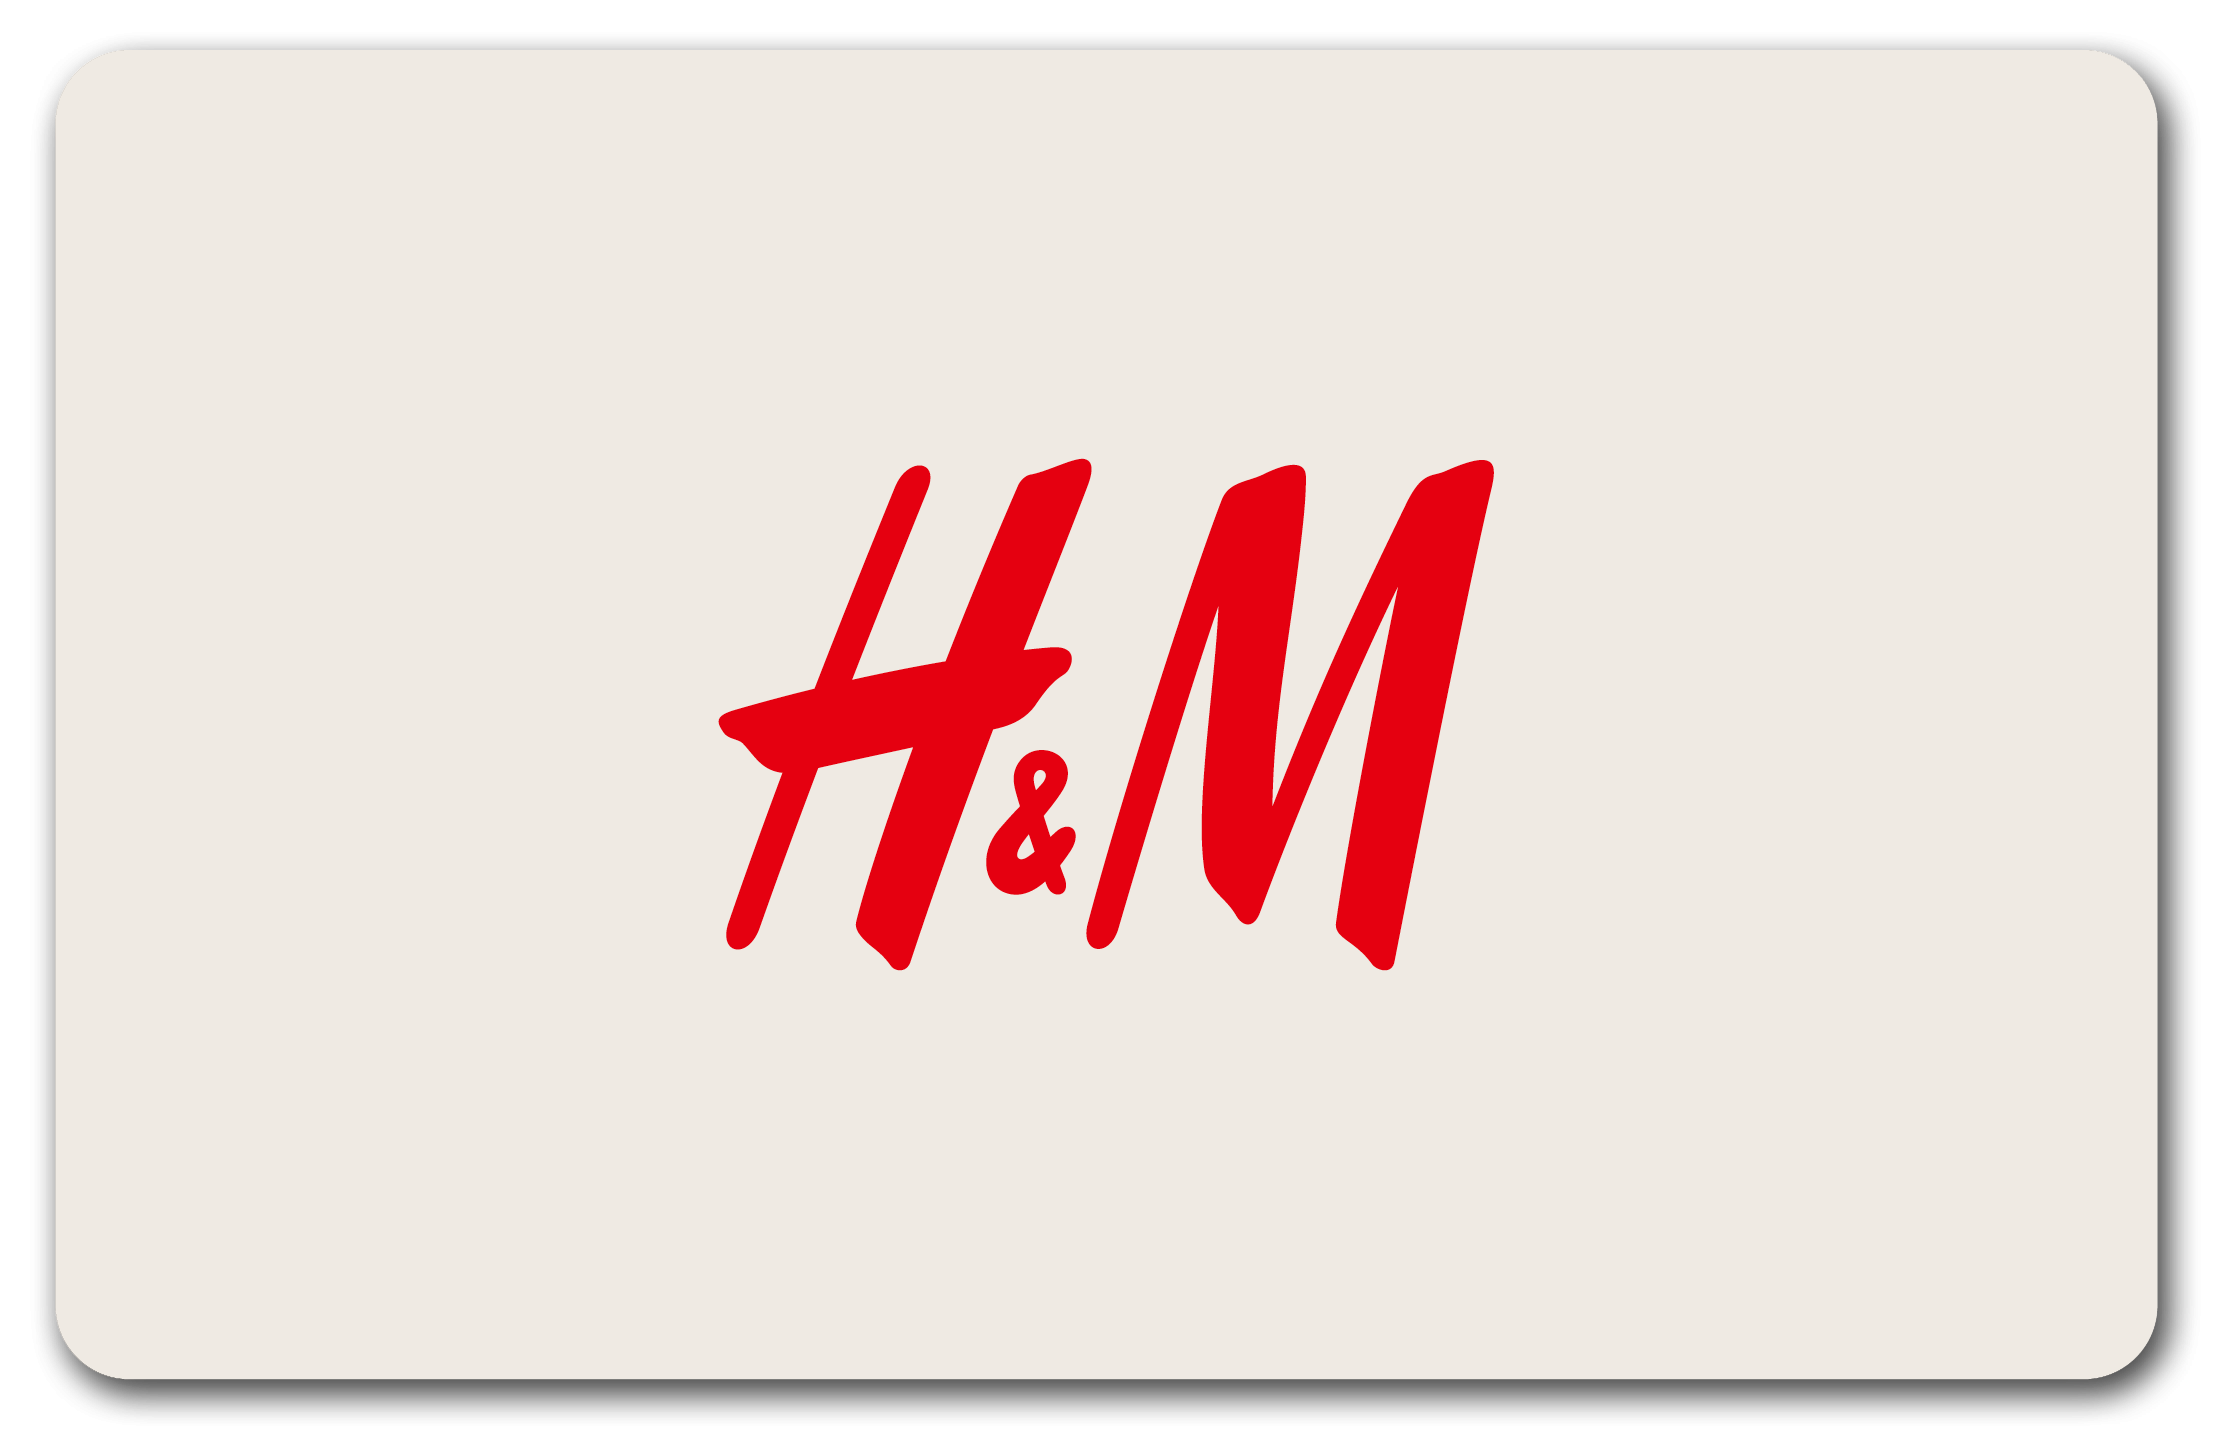 H&M Chauray